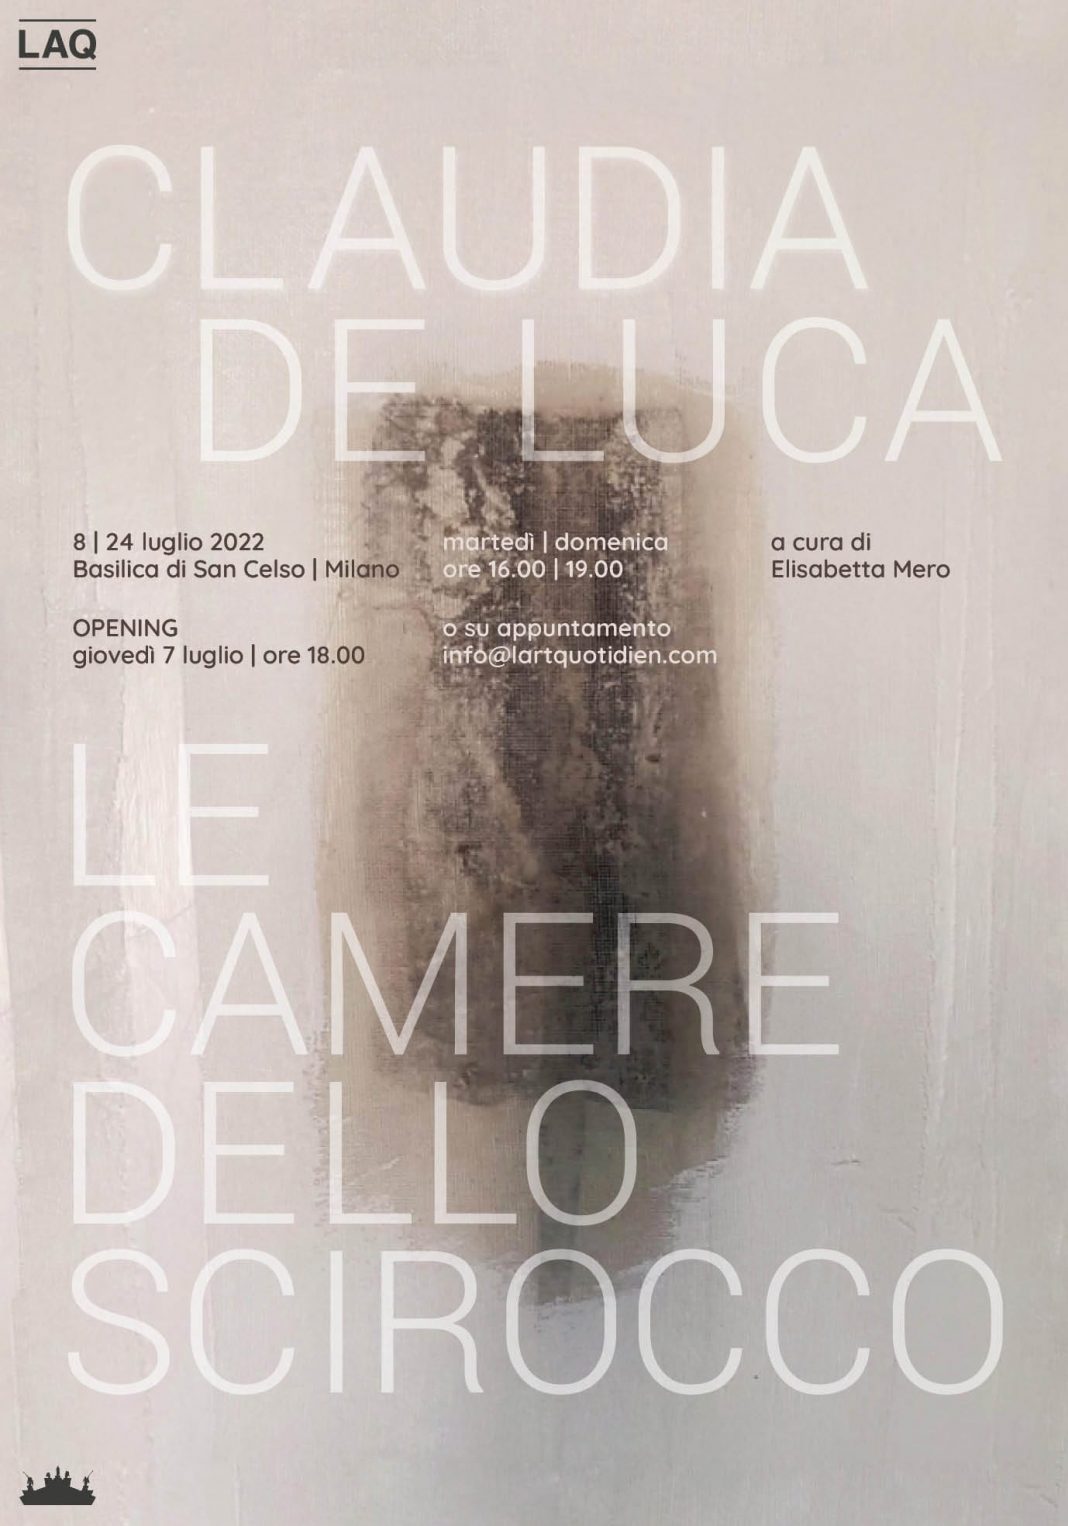 Claudia De Luca – Le camere dello sciroccohttps://www.exibart.com/repository/media/formidable/11/img/7d4/IMG-20220614-WA0025-1068x1526.jpg